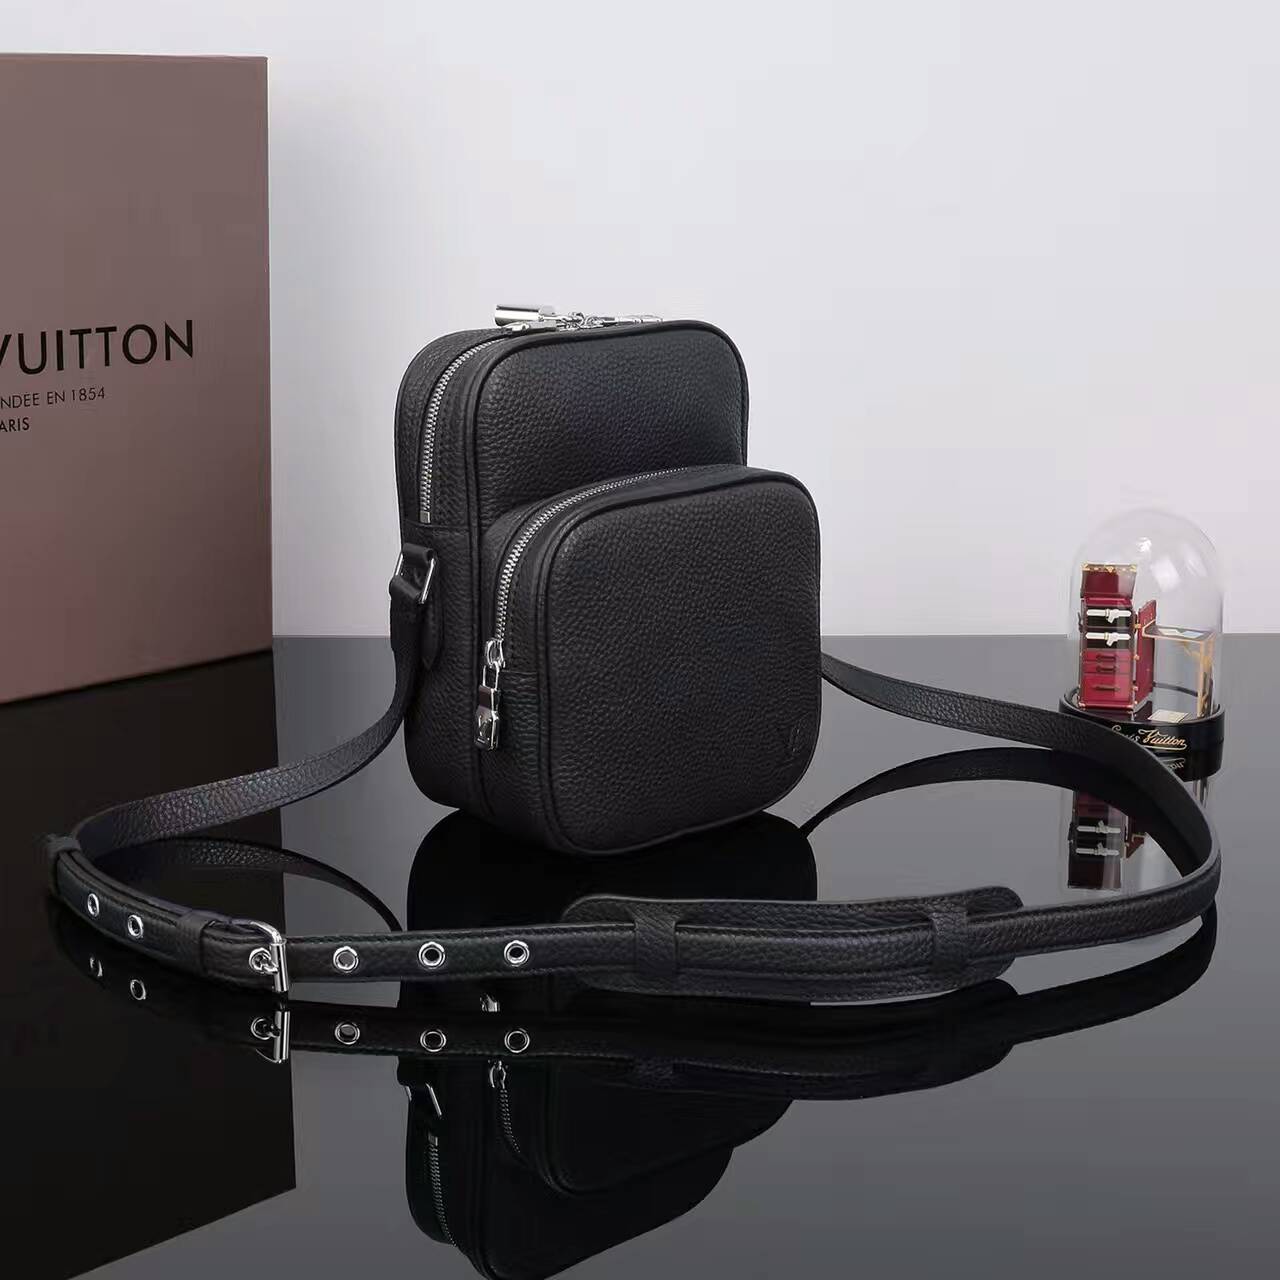 Túi Xách Louis Vuitton Taurillon Leather Amazone-22-M54303-TXLV063